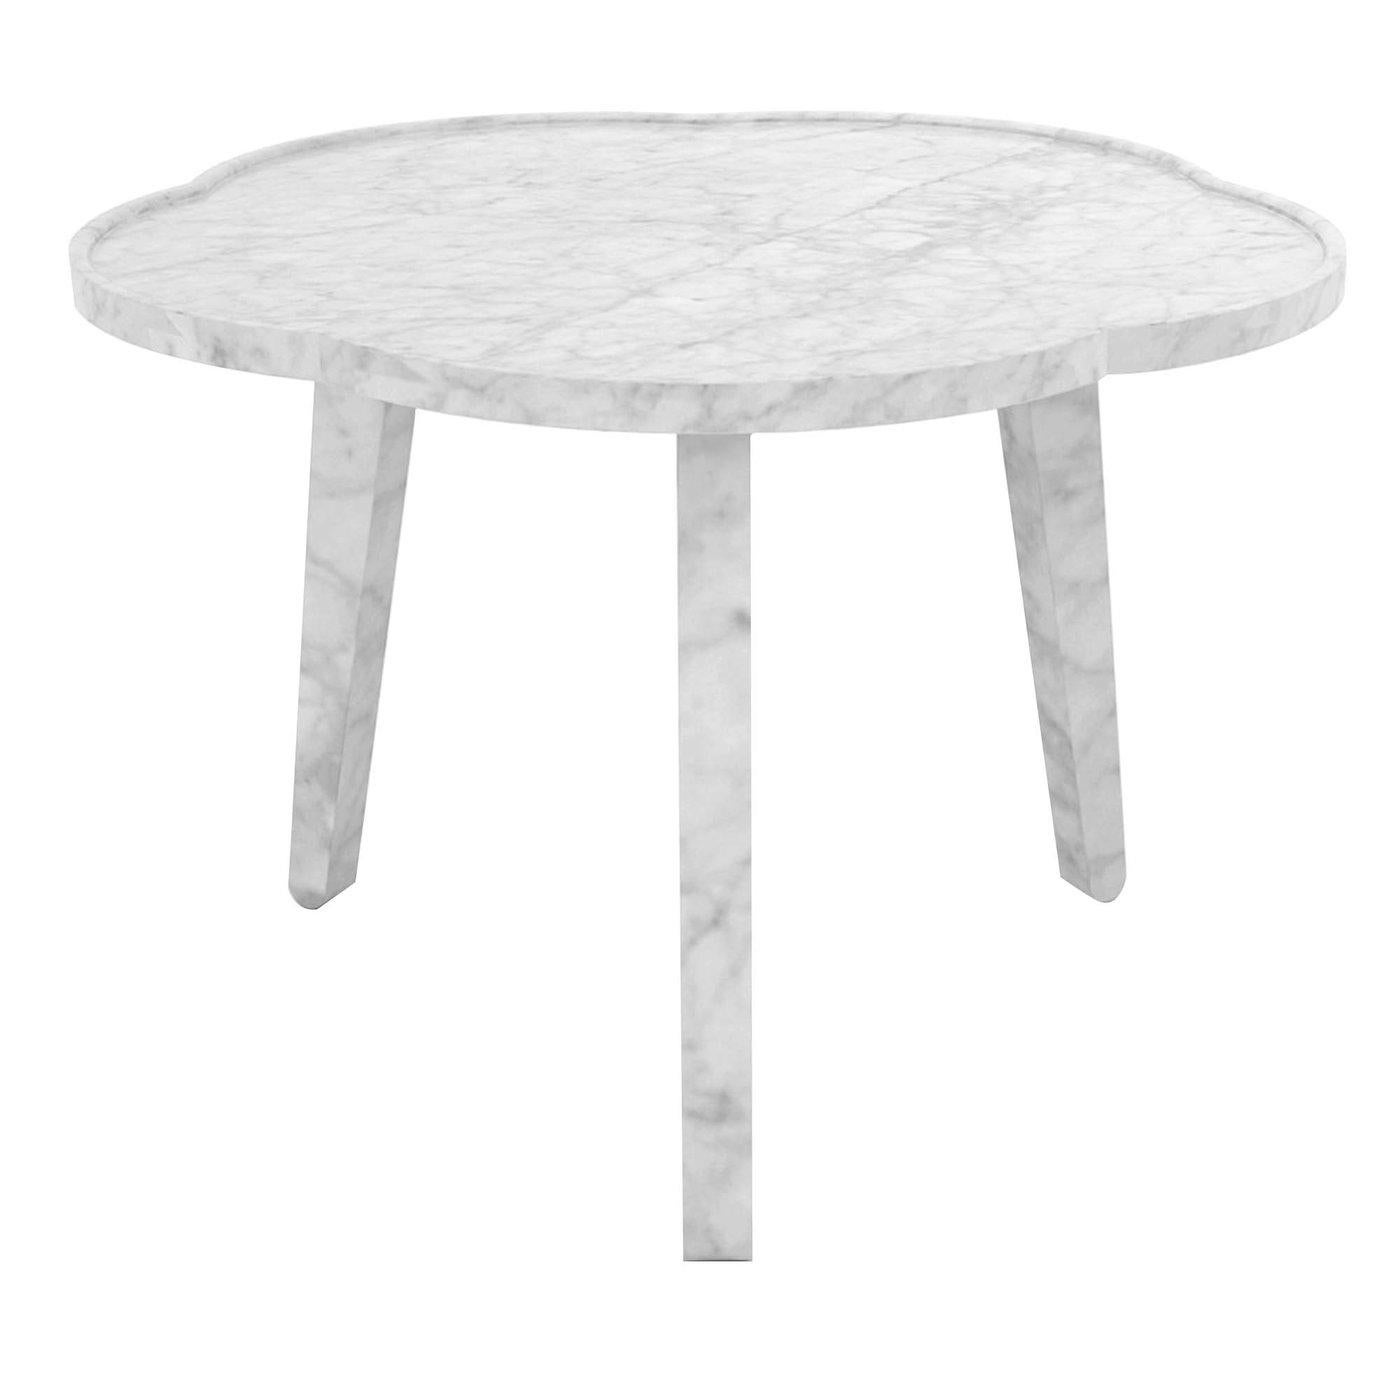 Italian White Soya Low Table, Design Claesson Koivisto Rune, 2013